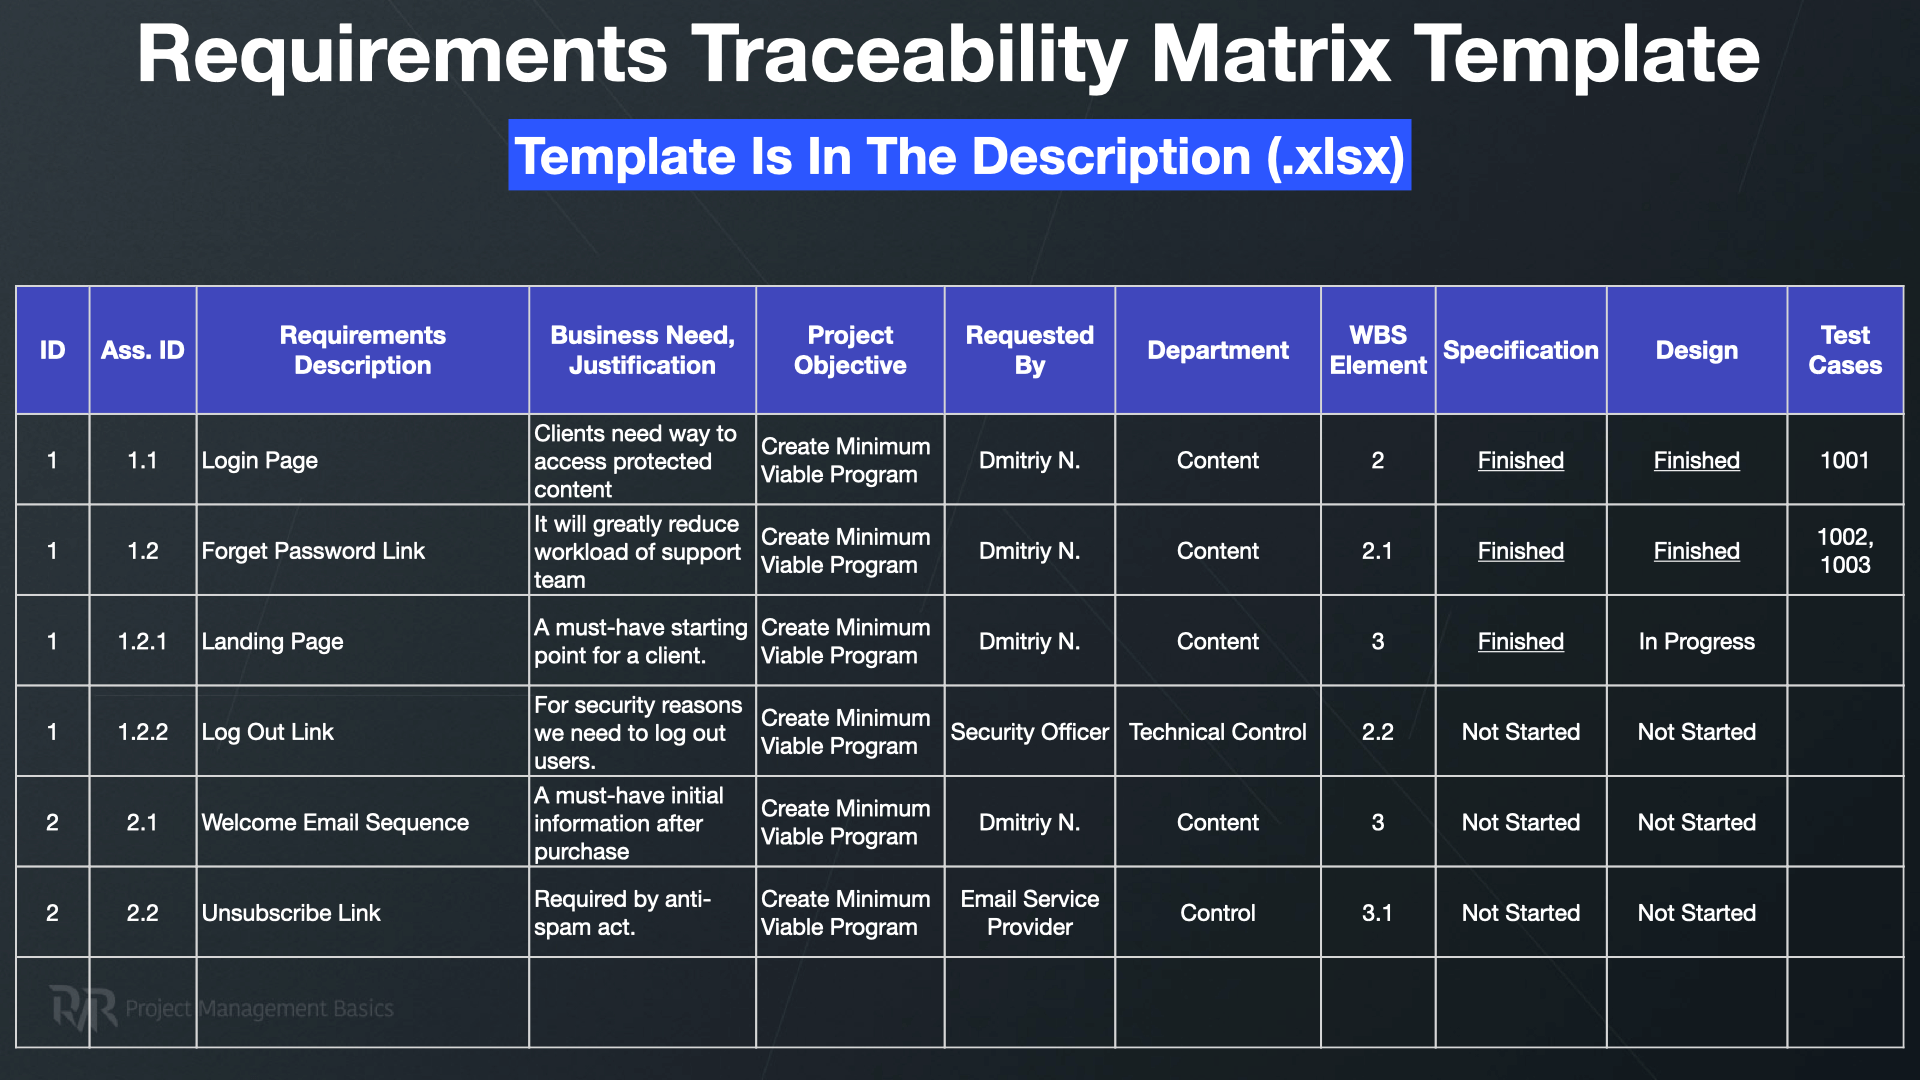 requirements-traceability-matrix-construction-project-example-delmer-vuono